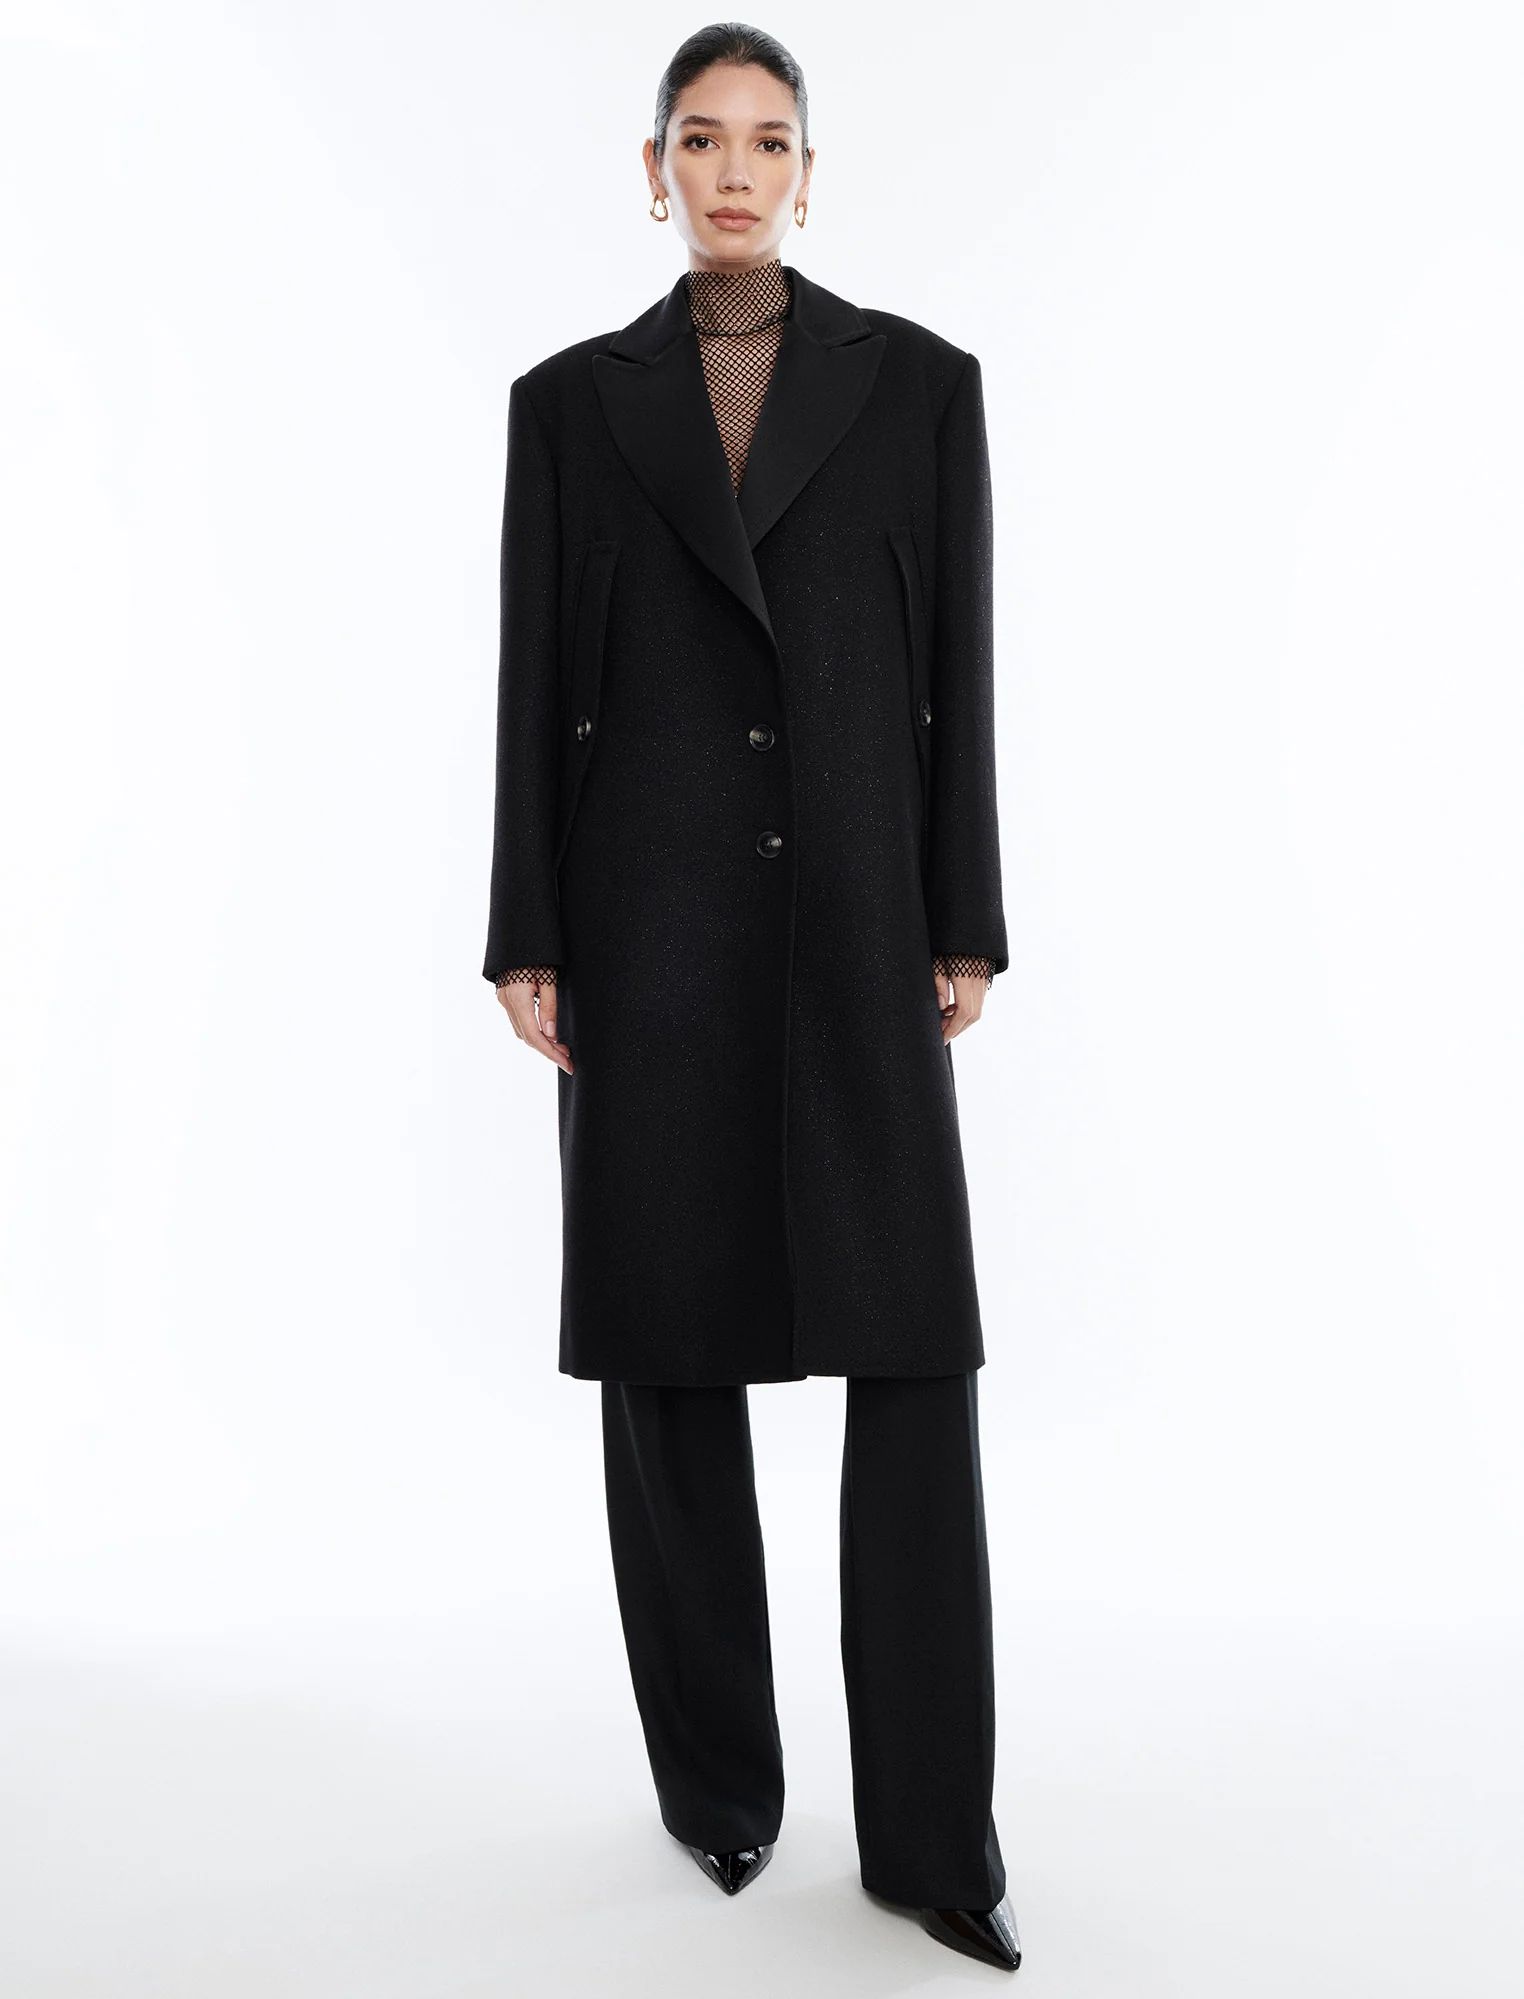 Black Wool Cape Coat | Outerwear | BCBGMAXAZRIA | BCBG Max Azria 